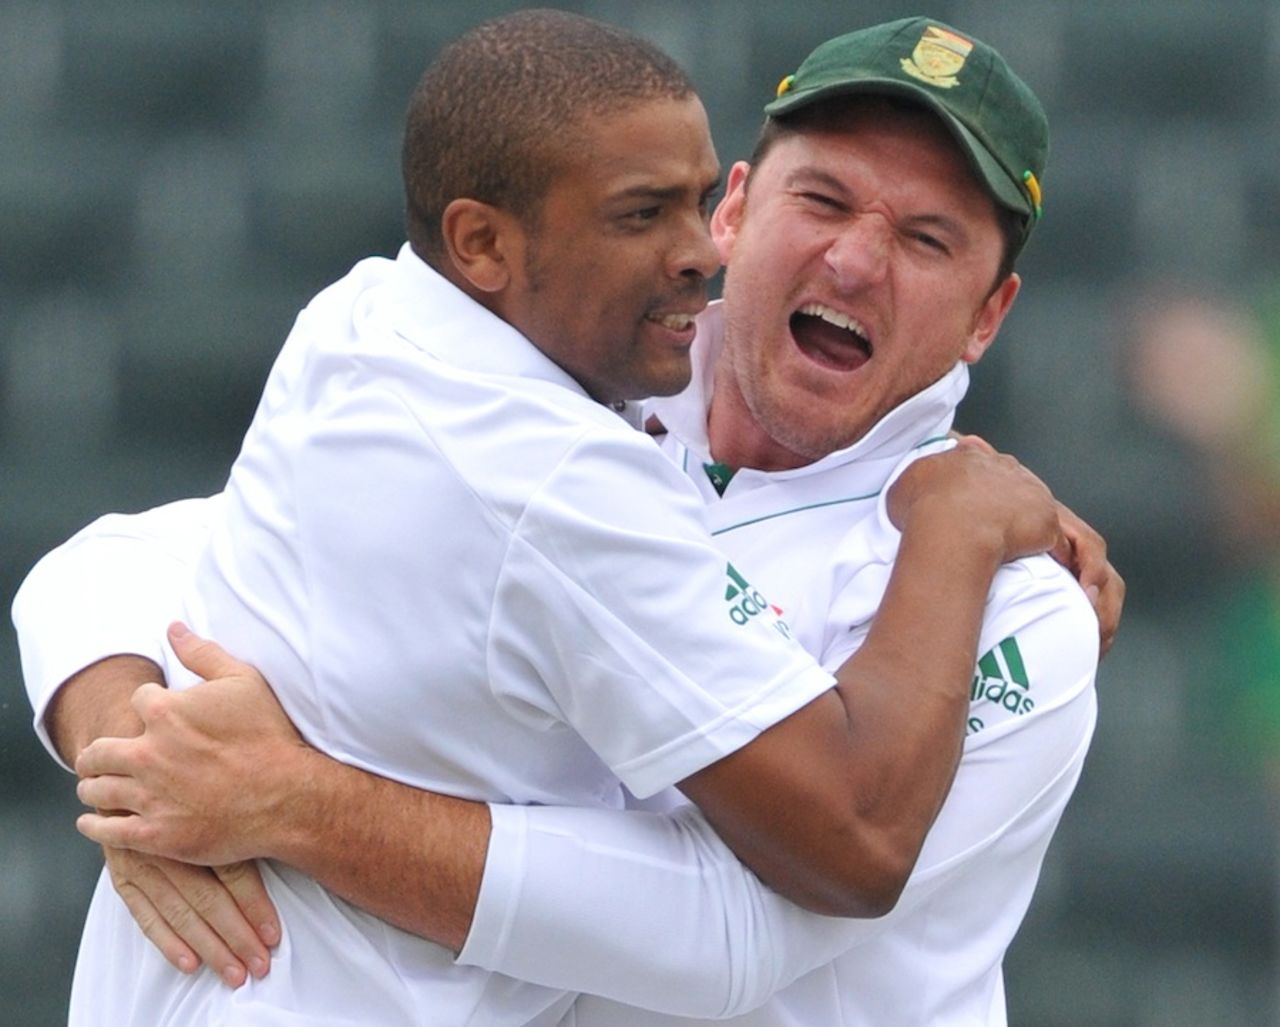 Graeme Smith and Vernon Philander celebrate the wicket of Shane Watson, South Africa v Australia, 2nd Test, Johannesburg, 4th day, November 20, 2011